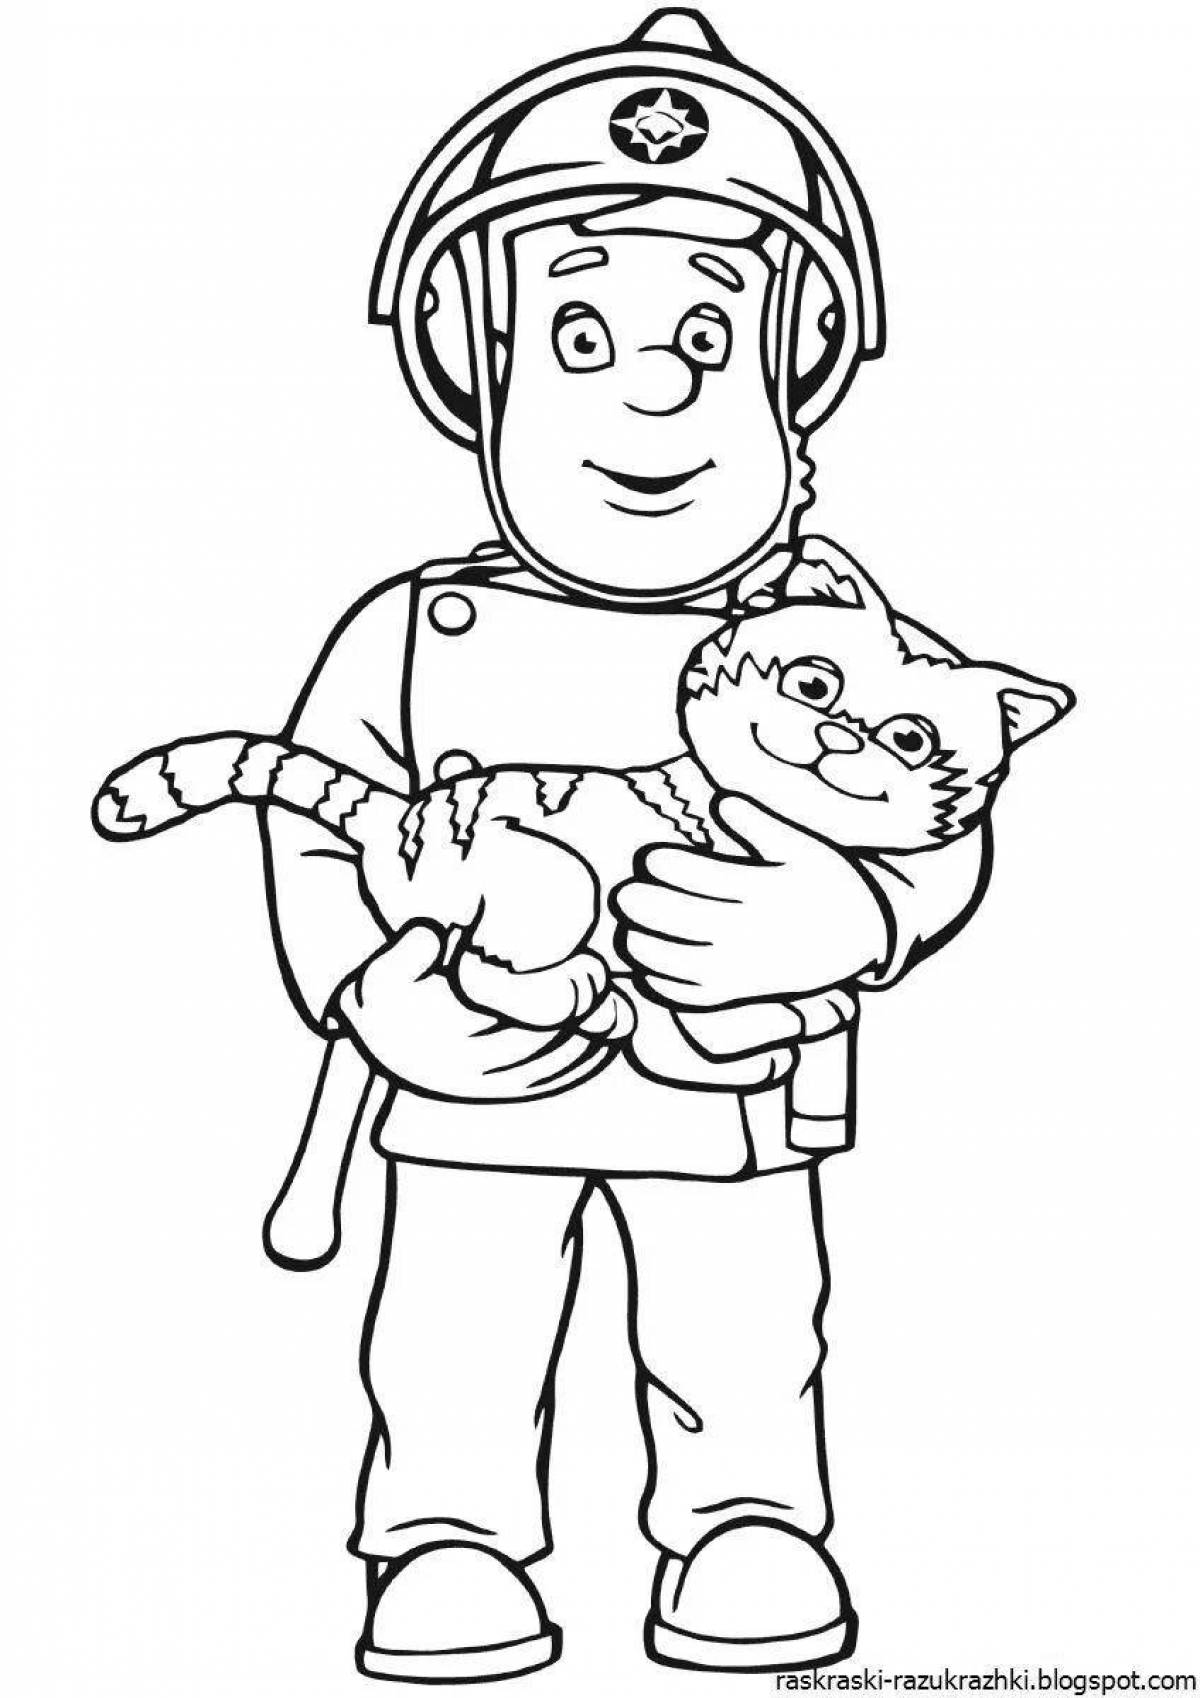 Fun drawing of a fireman for kids